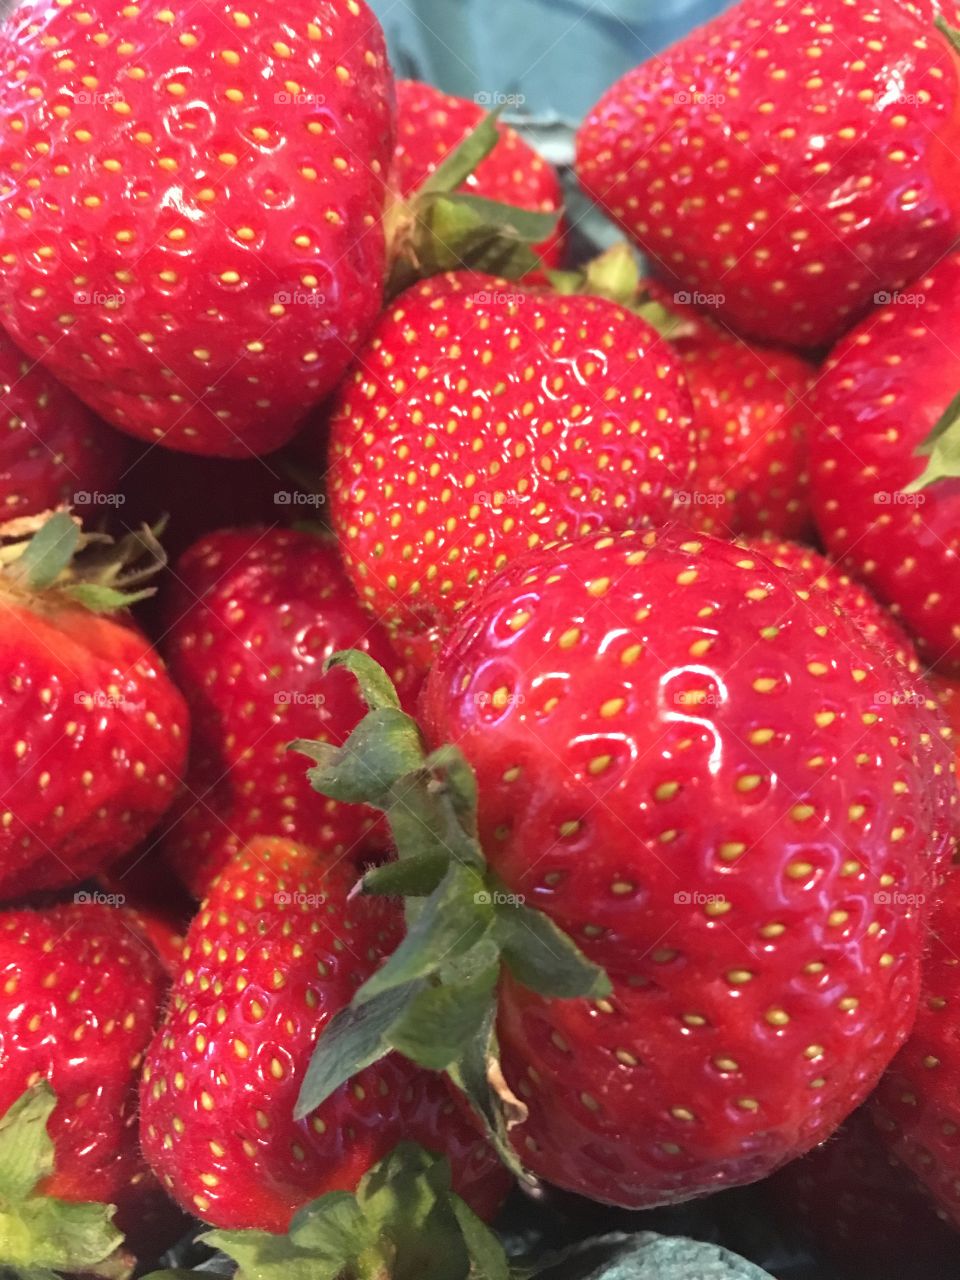 Fresh picked strawberries 